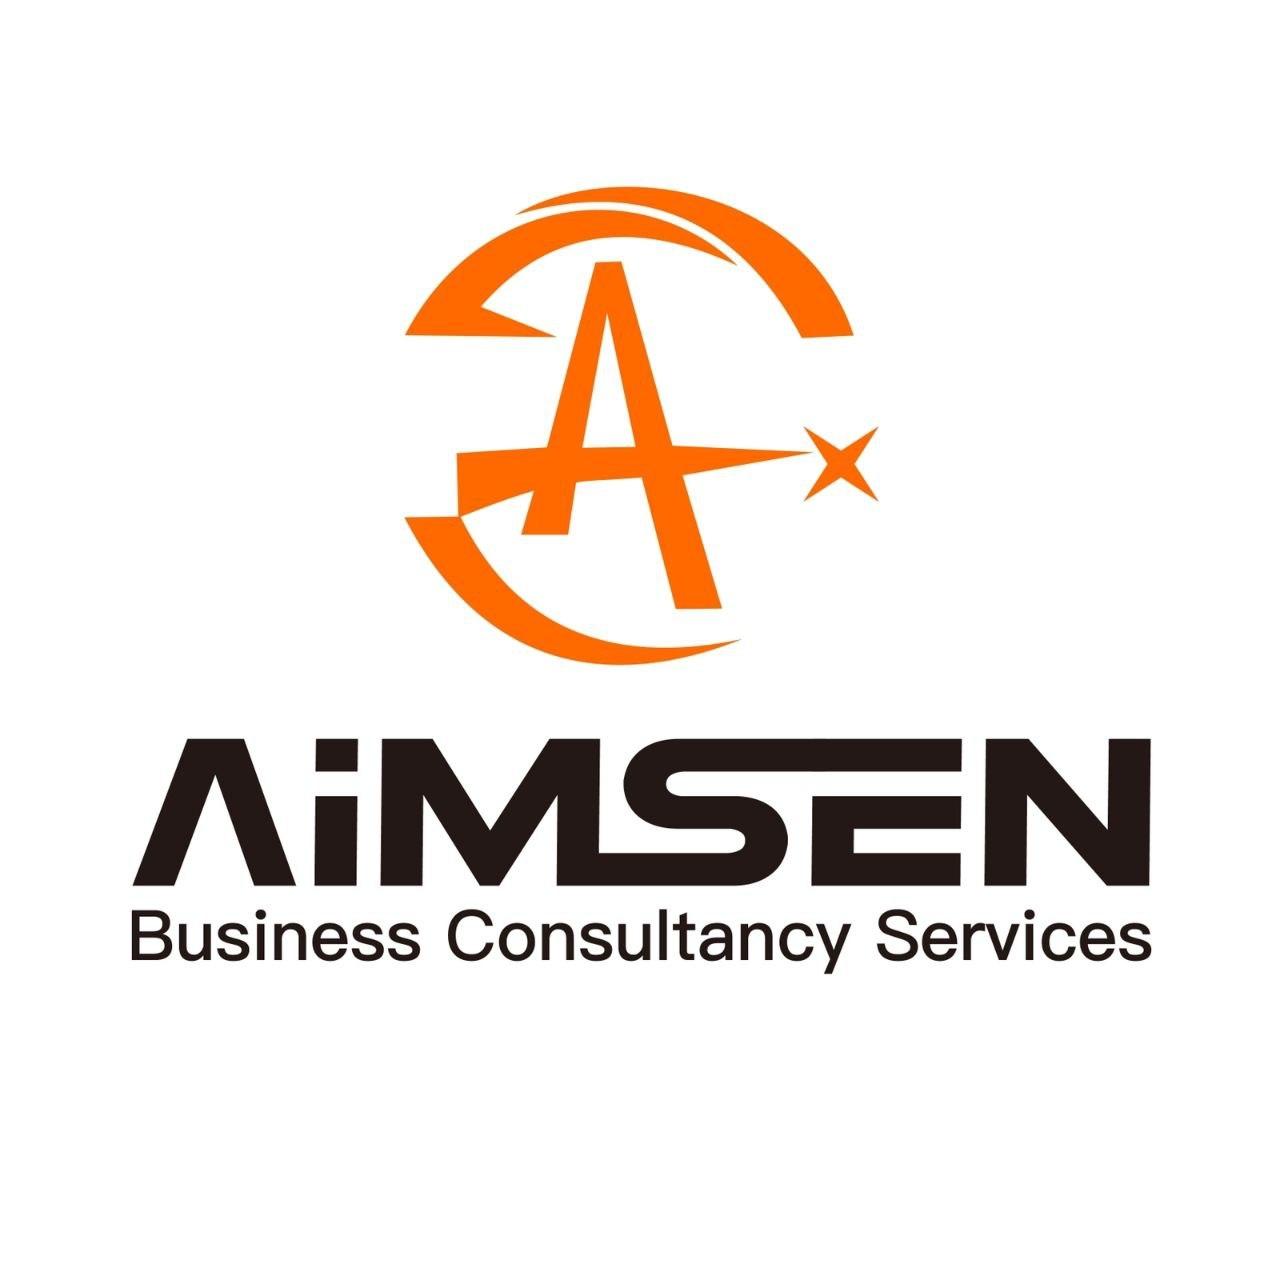 AIMSEN BUSINESS CONSULTANCY SERVICES